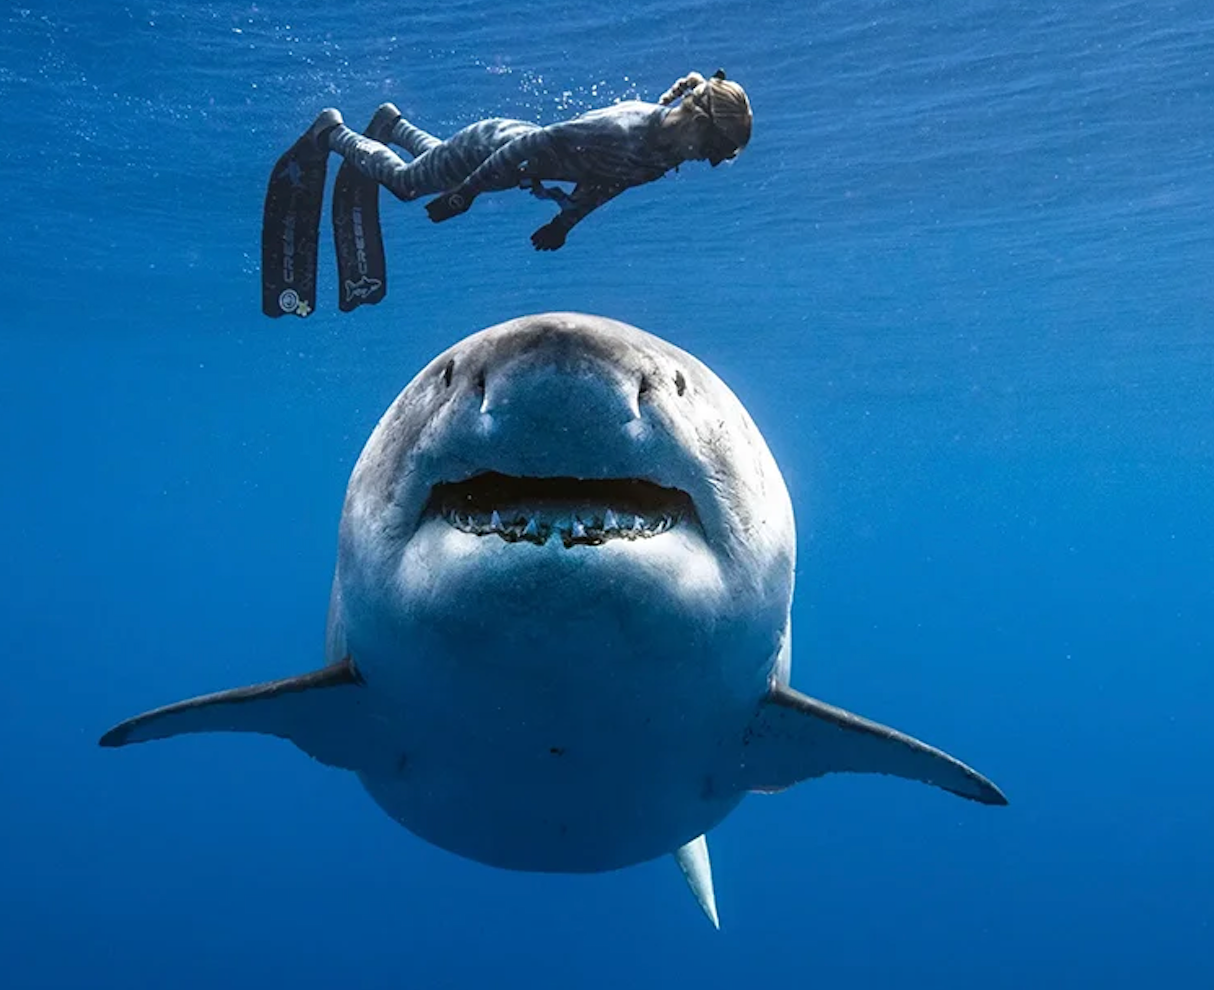 diver and shark, Great White Shark, close shark encounter